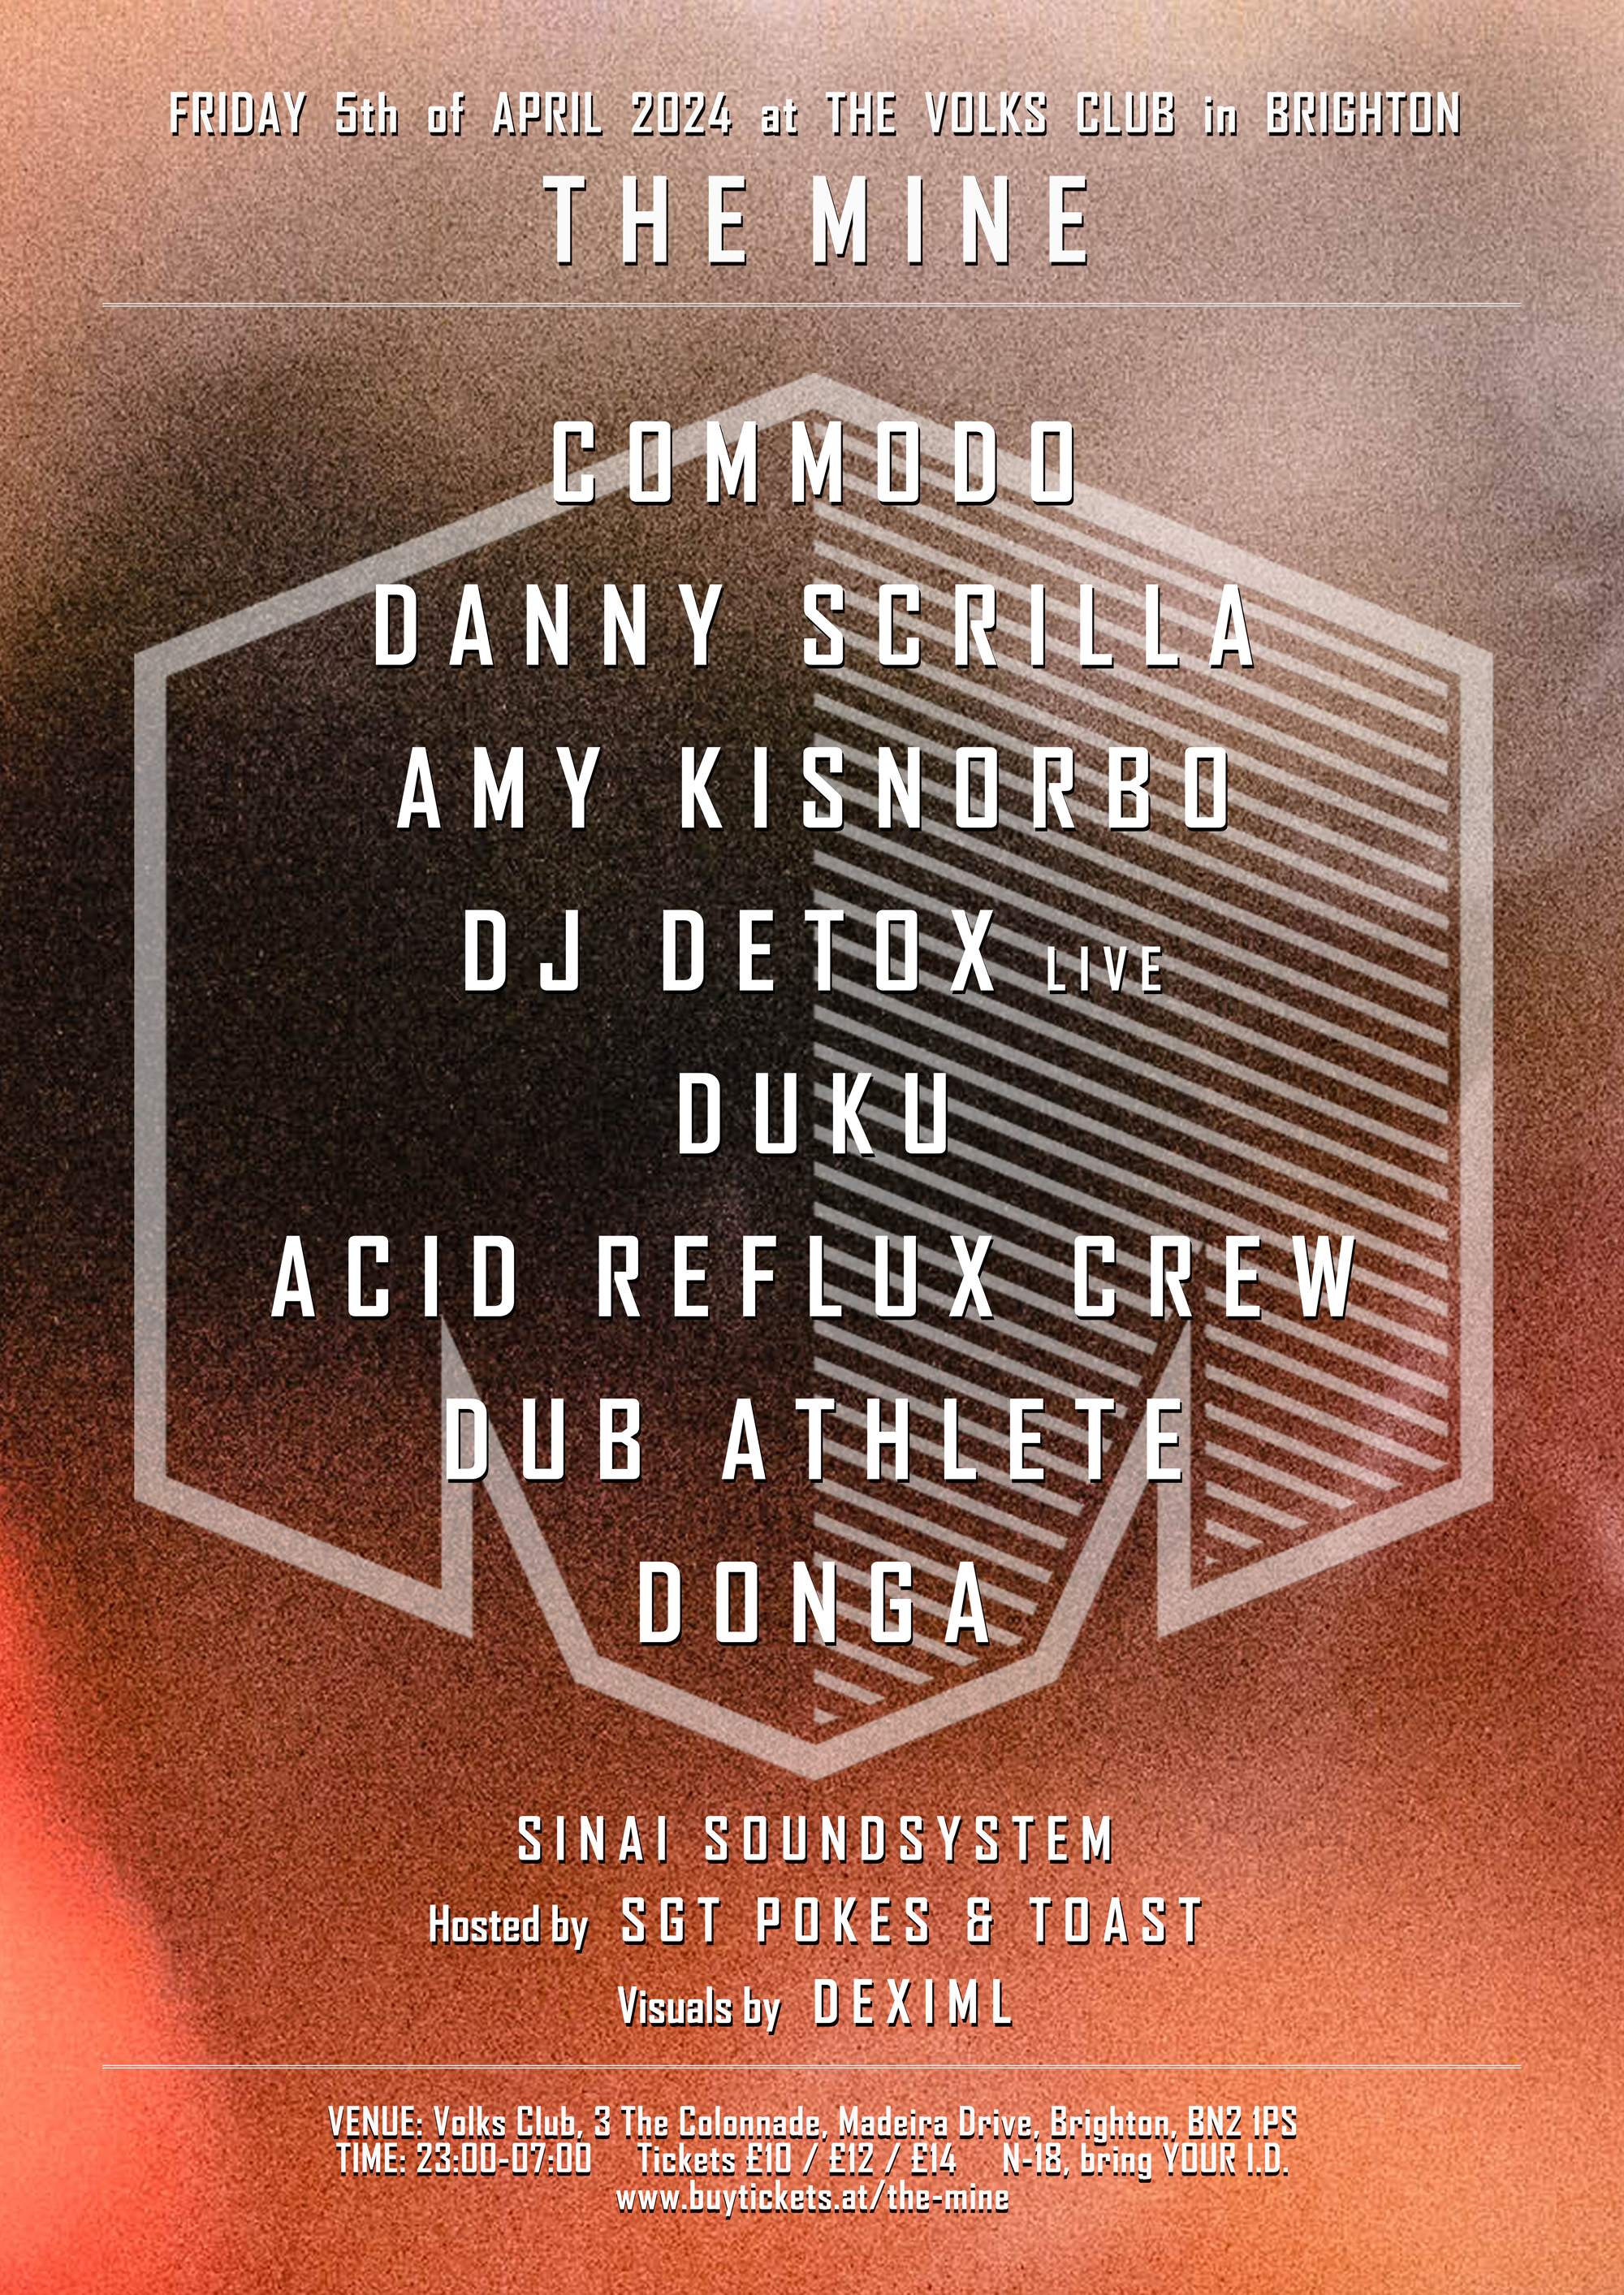 THE MINE with Commodo, Danny Scrilla, Amy Kisnorbo, DJ Detox LIVE + Sinai Soundsystem - Página trasera